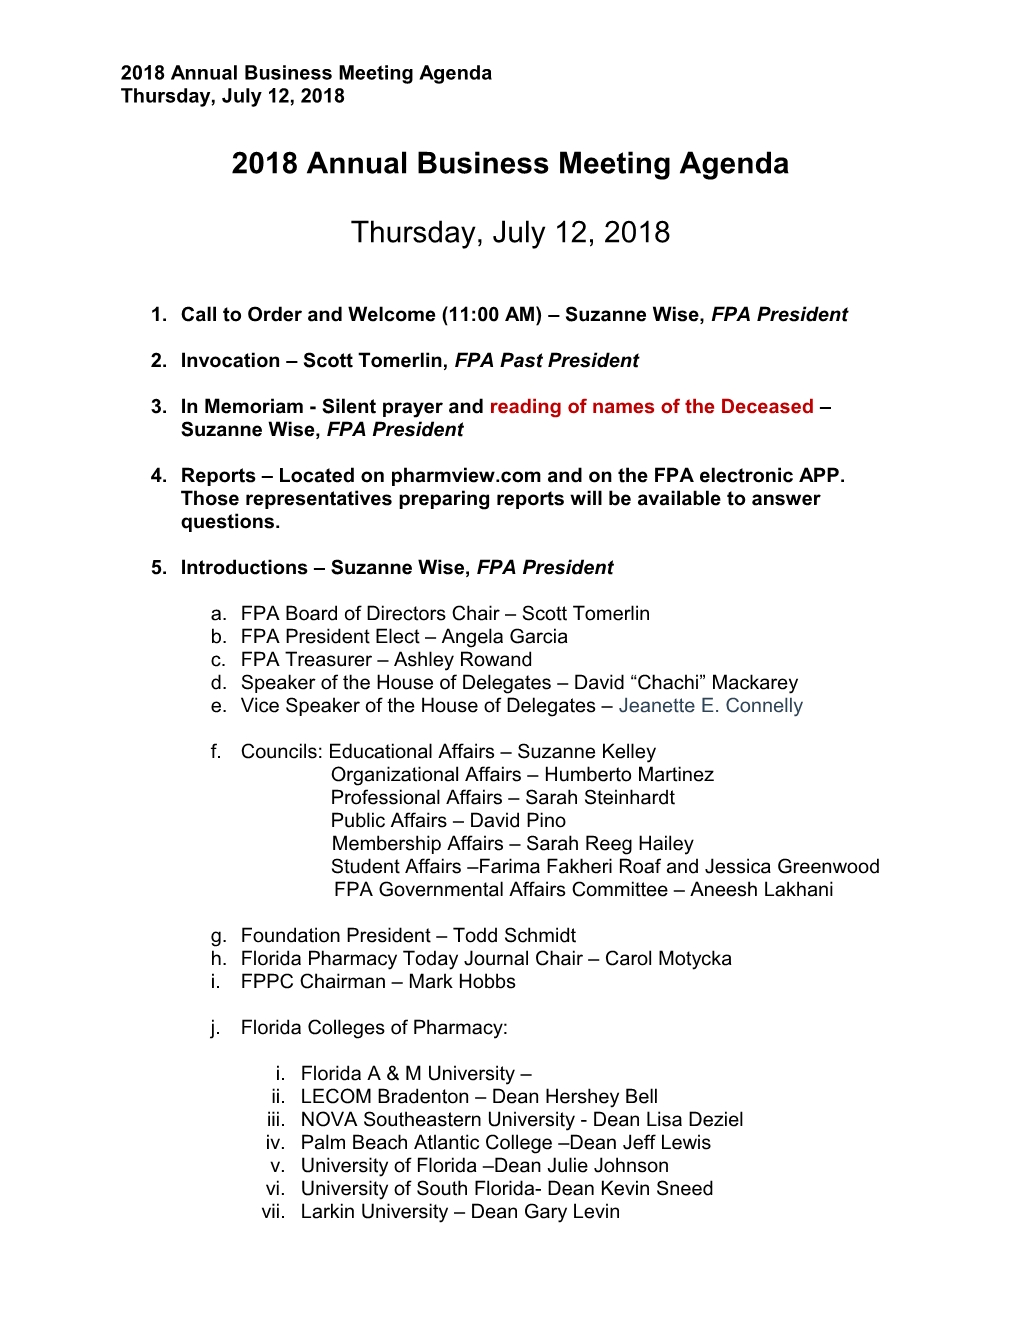 2009 Annual Business Meeting Agenda